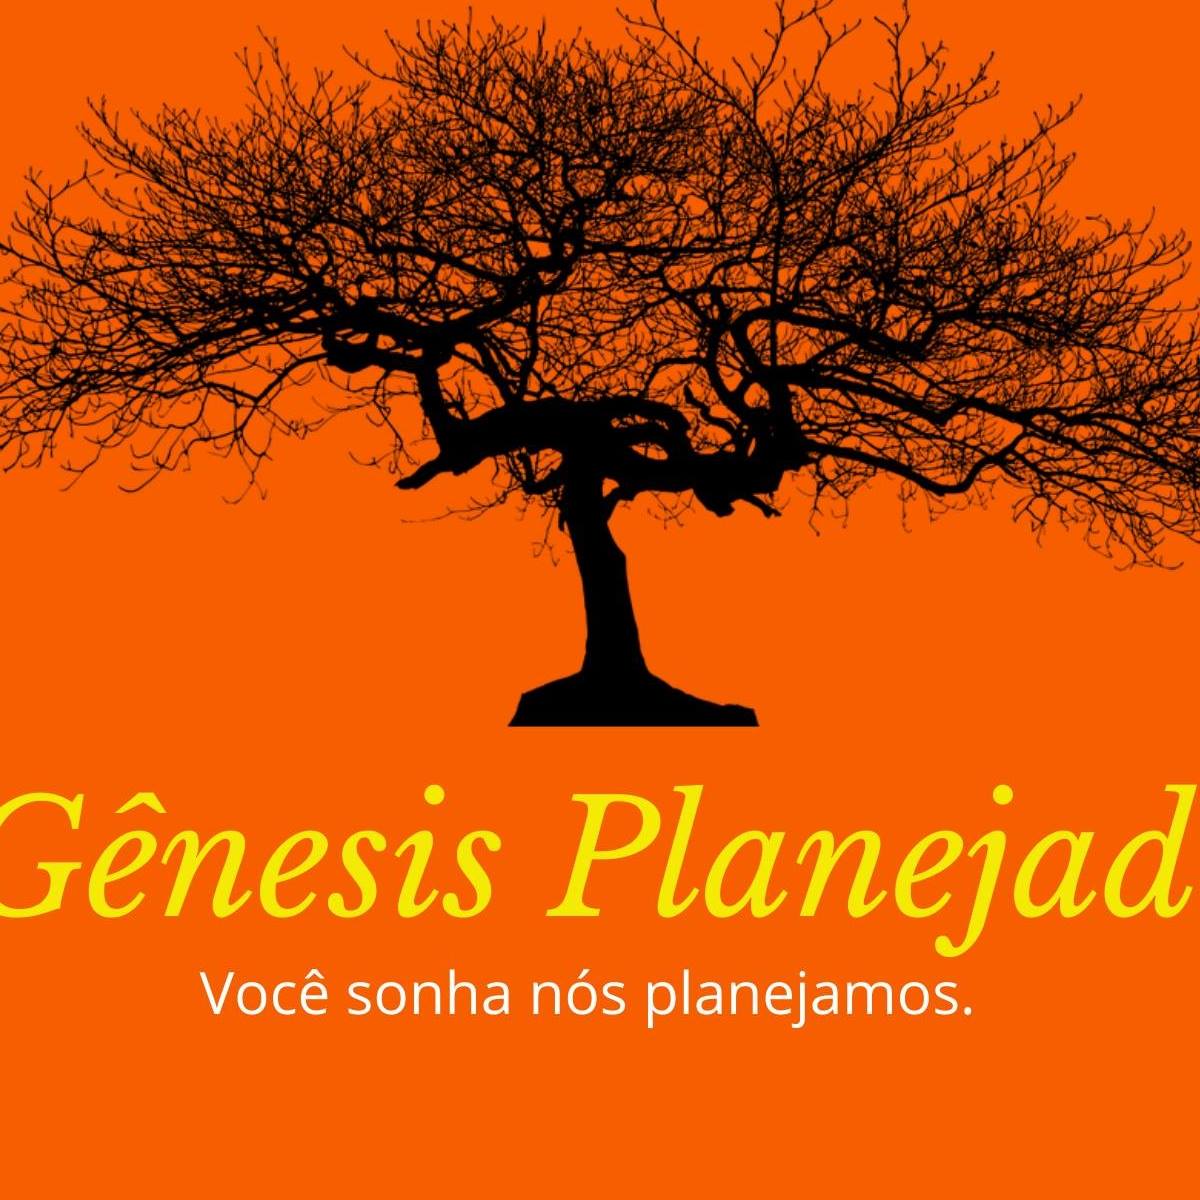 Gênesis Planejados